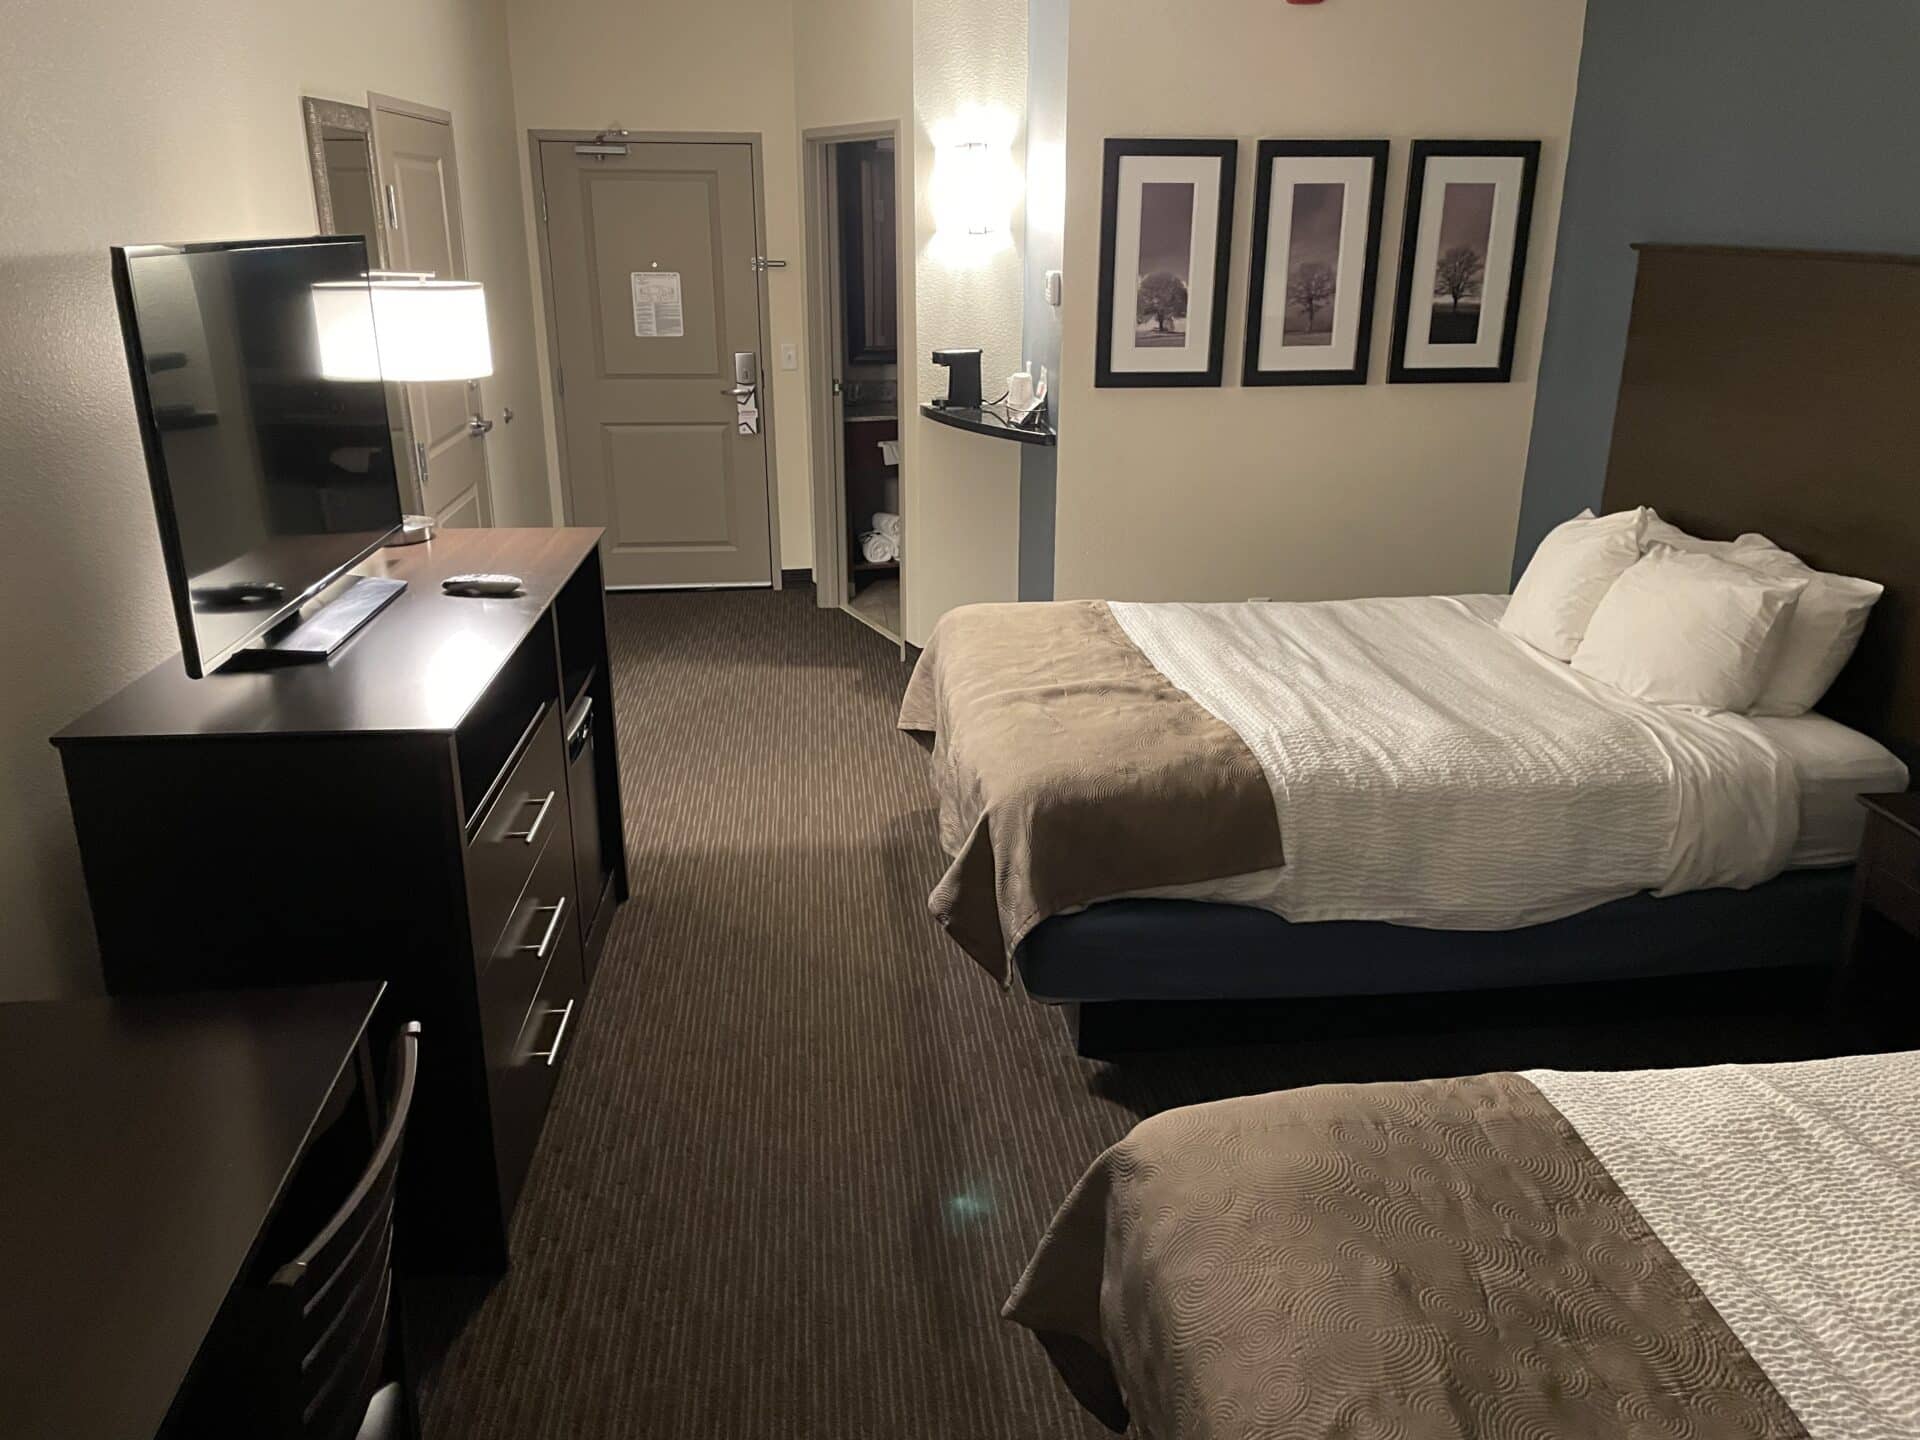 AmericInn hotel room